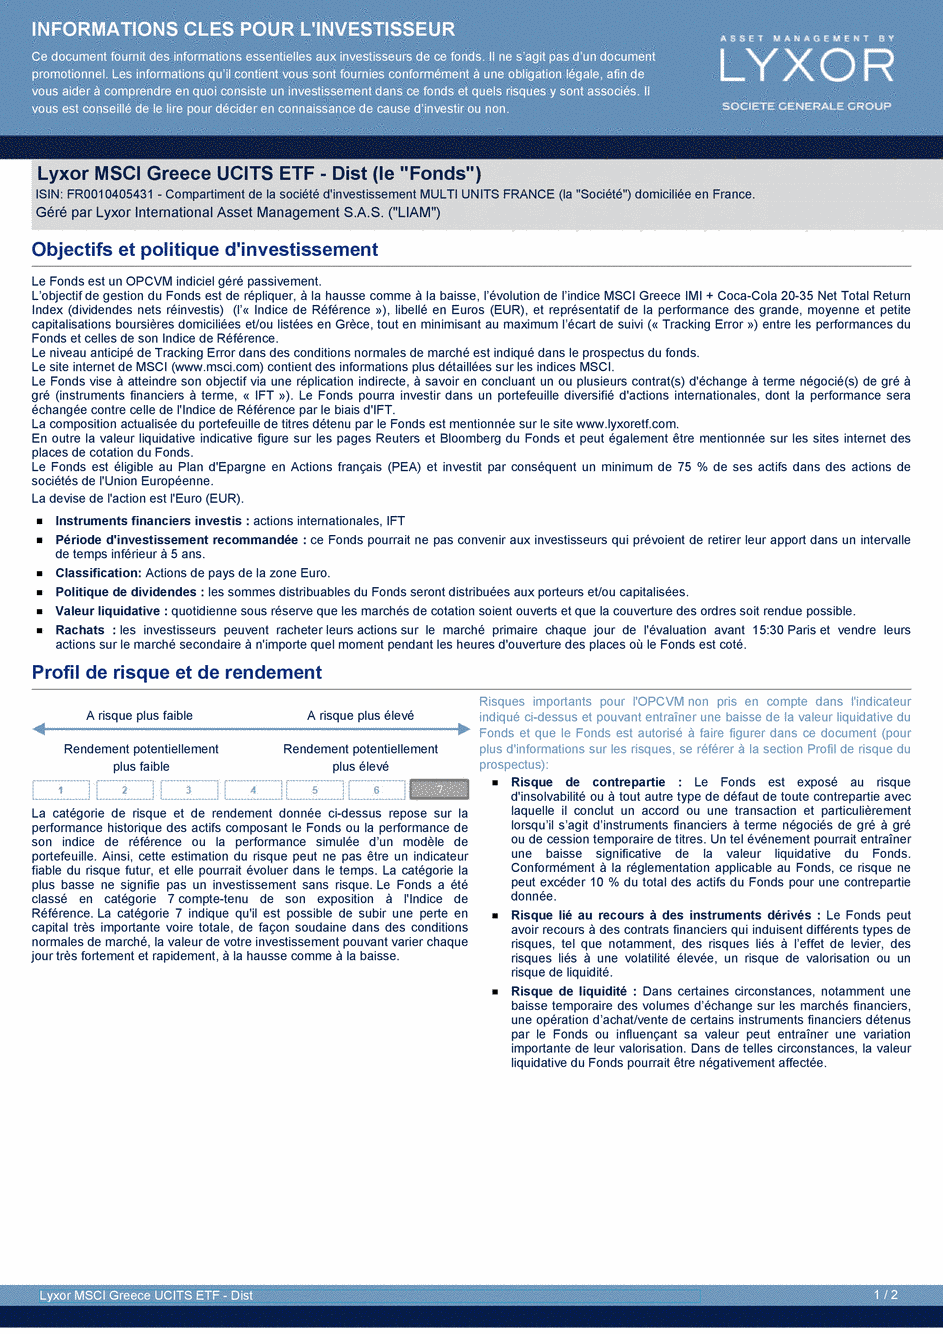 DICI Lyxor MSCI Greece UCITS ETF - Dist - 19/02/2021 - Français